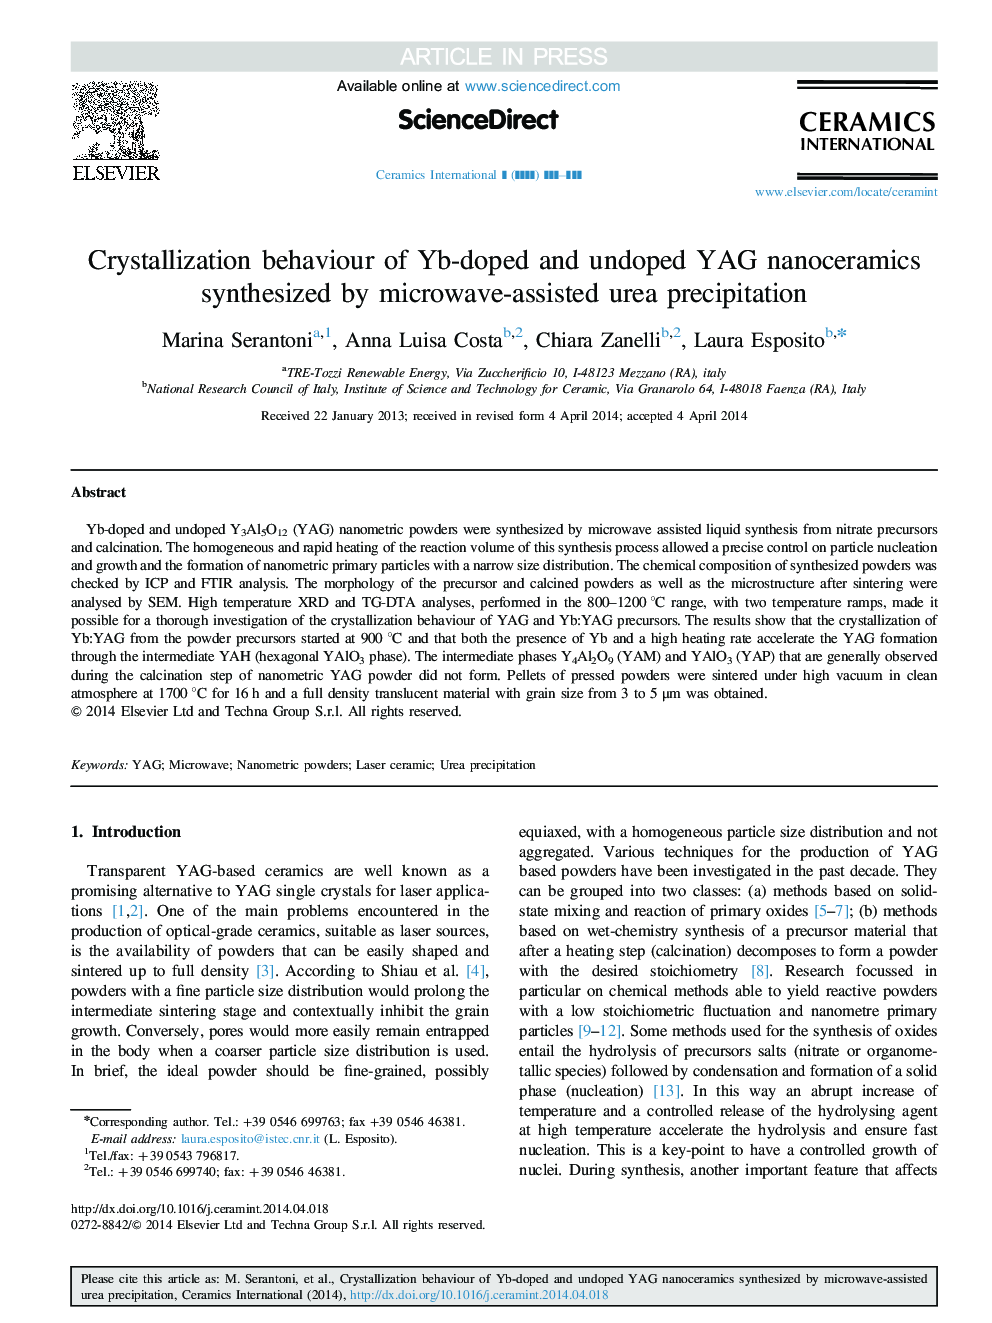 Crystallization behaviour of Yb-doped and undoped YAG nanoceramics synthesized by microwave-assisted urea precipitation